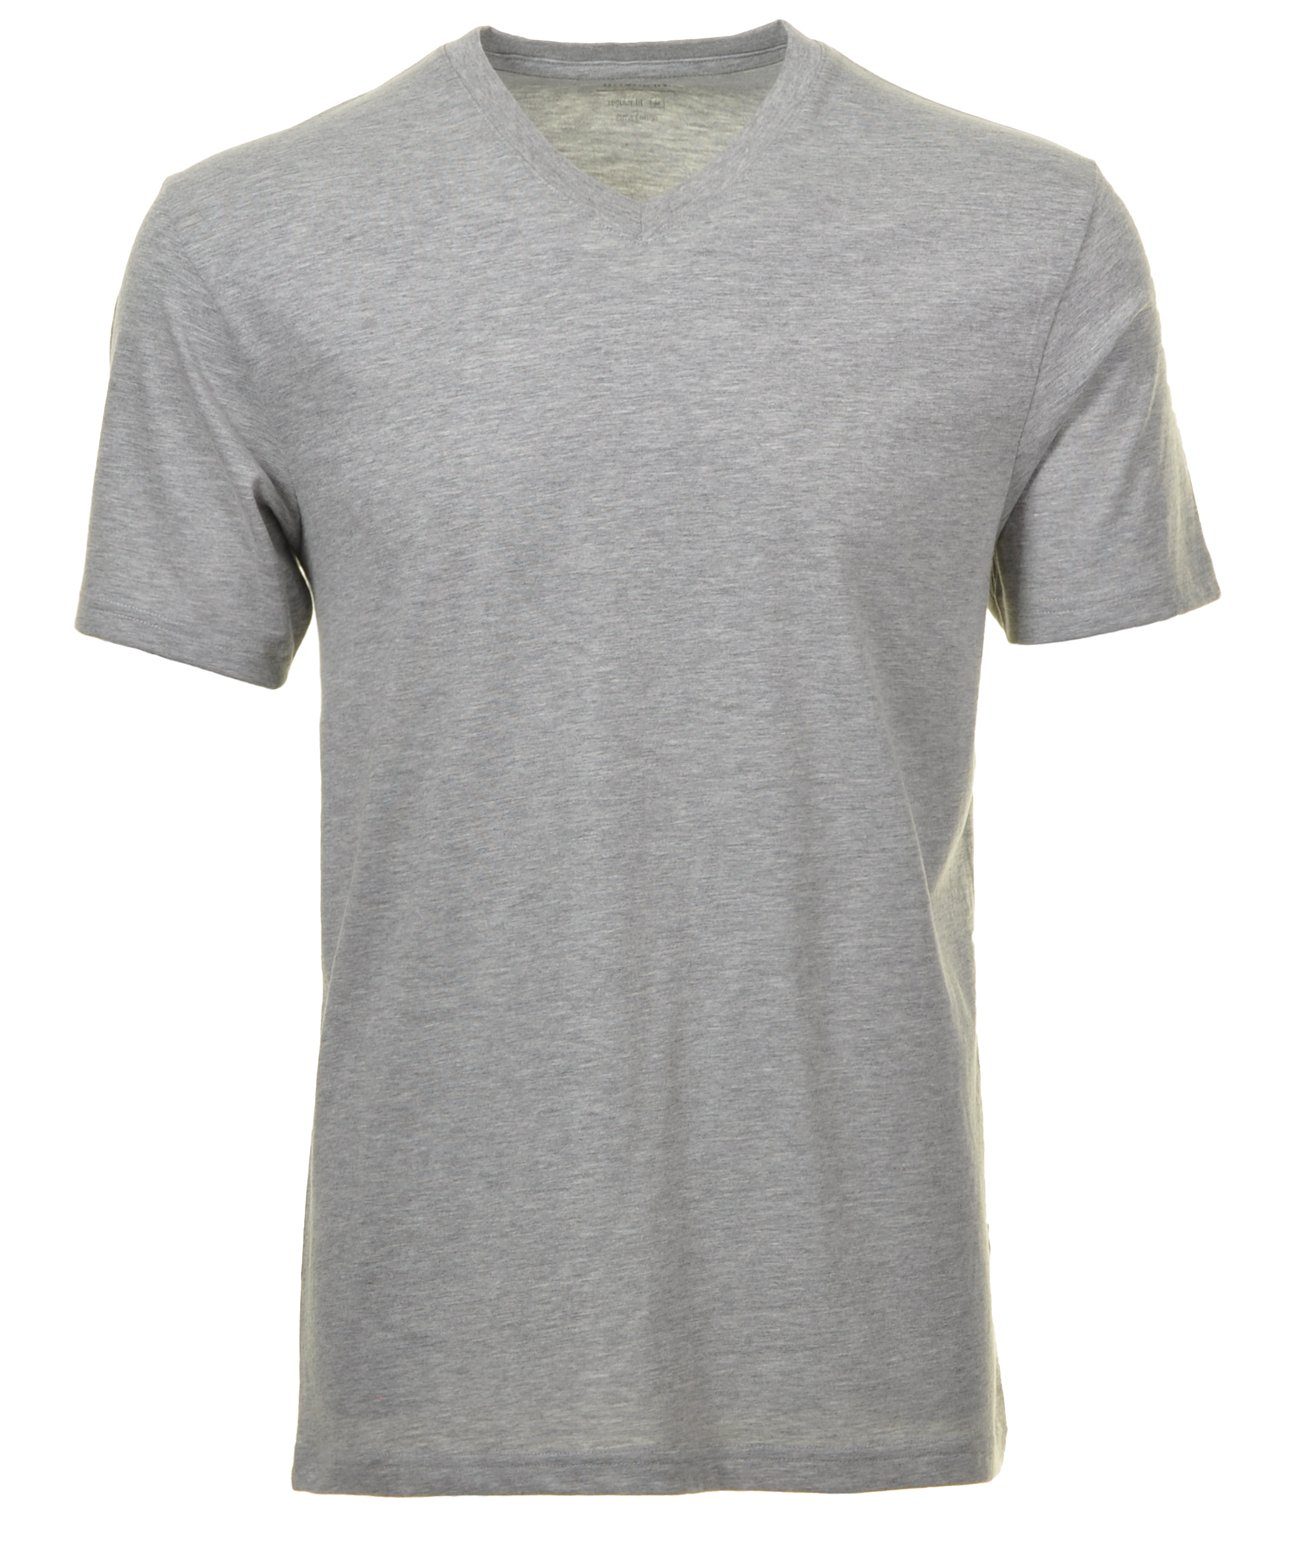 Grau-Melange RAGMAN T-Shirt